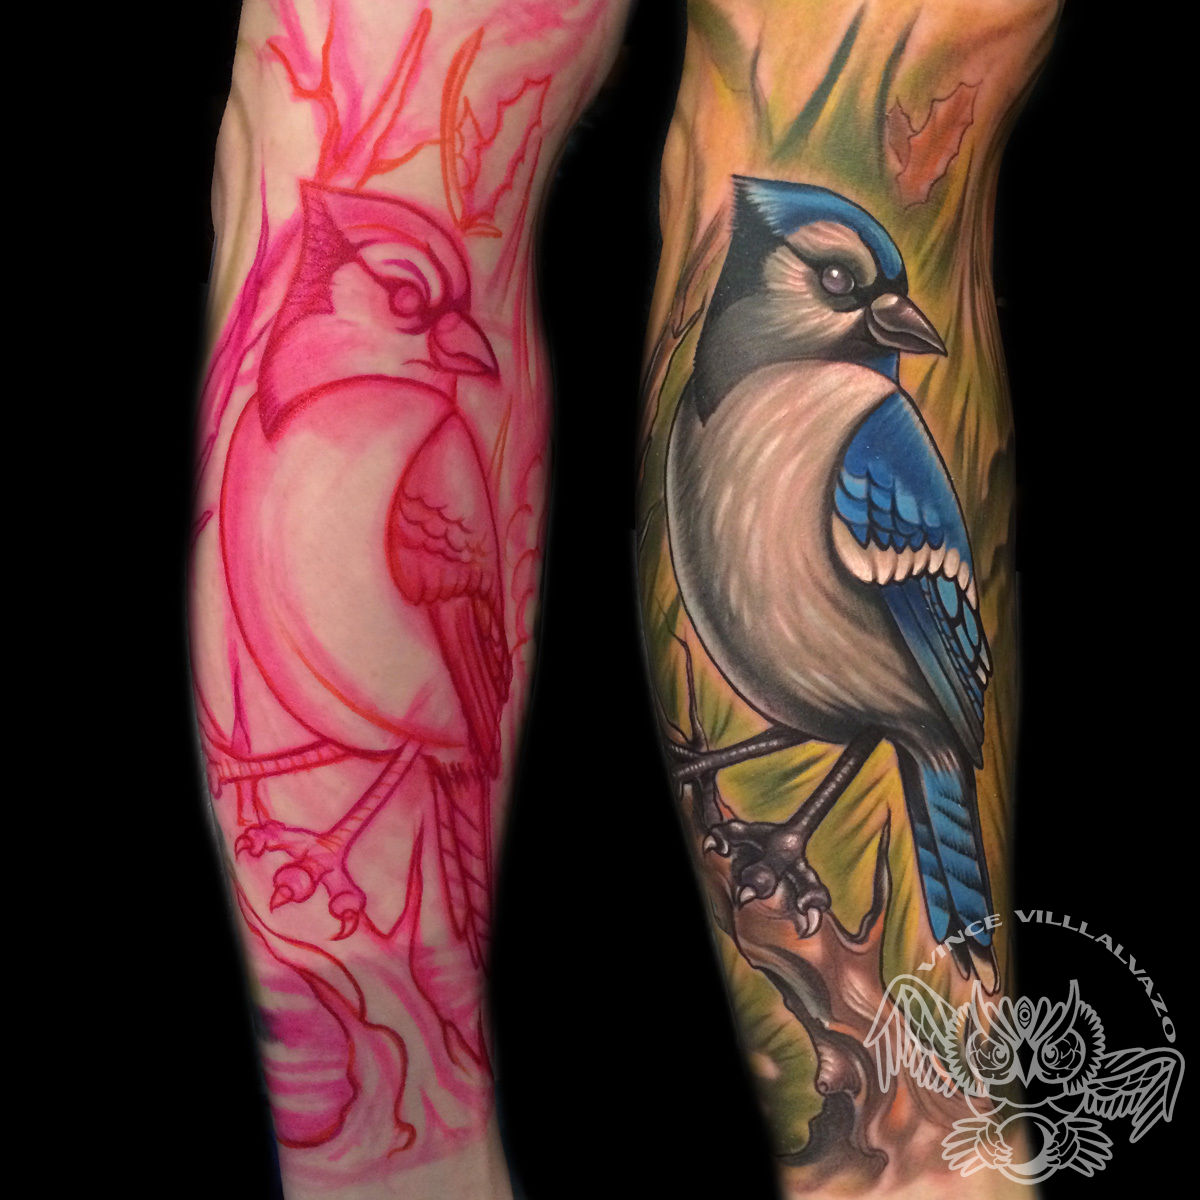 Assassin Tattoo Studio  Blue jay feather by Rich richierichtattoo     tattoo tattoos tattooing tattooshop tattooartist besttattoos bodyart  assassintattoo assassintattoos assassintattoostudio akrontattoos akron  tattooideas tattoogoals 